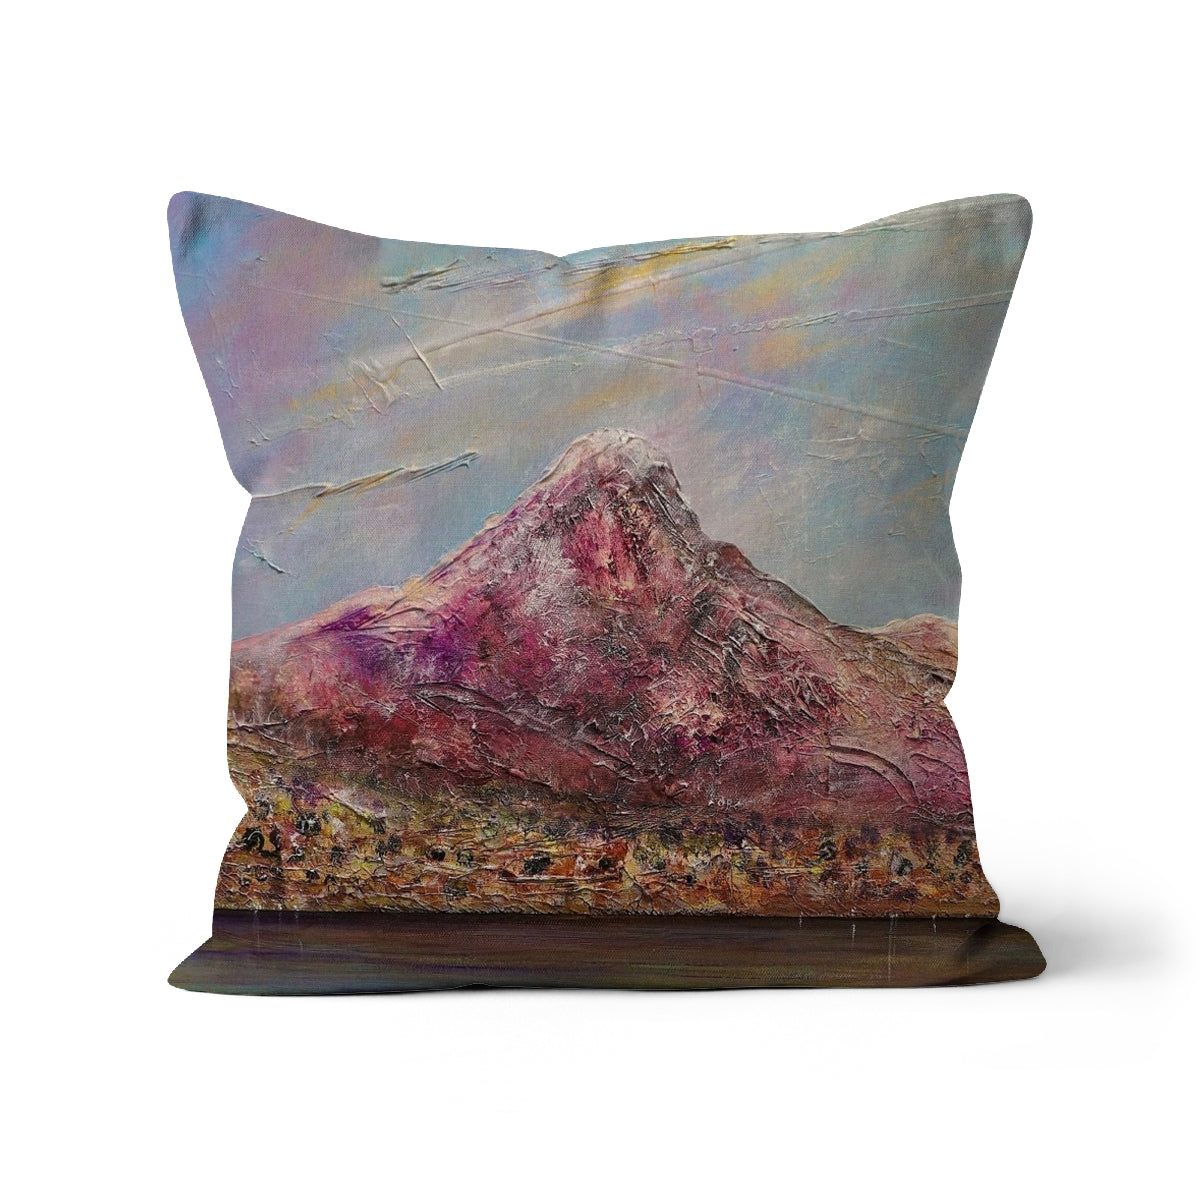 Ben Lomond Art Gifts Cushion-Cushions-Scottish Lochs & Mountains Art Gallery-Linen-12"x12"-Paintings, Prints, Homeware, Art Gifts From Scotland By Scottish Artist Kevin Hunter